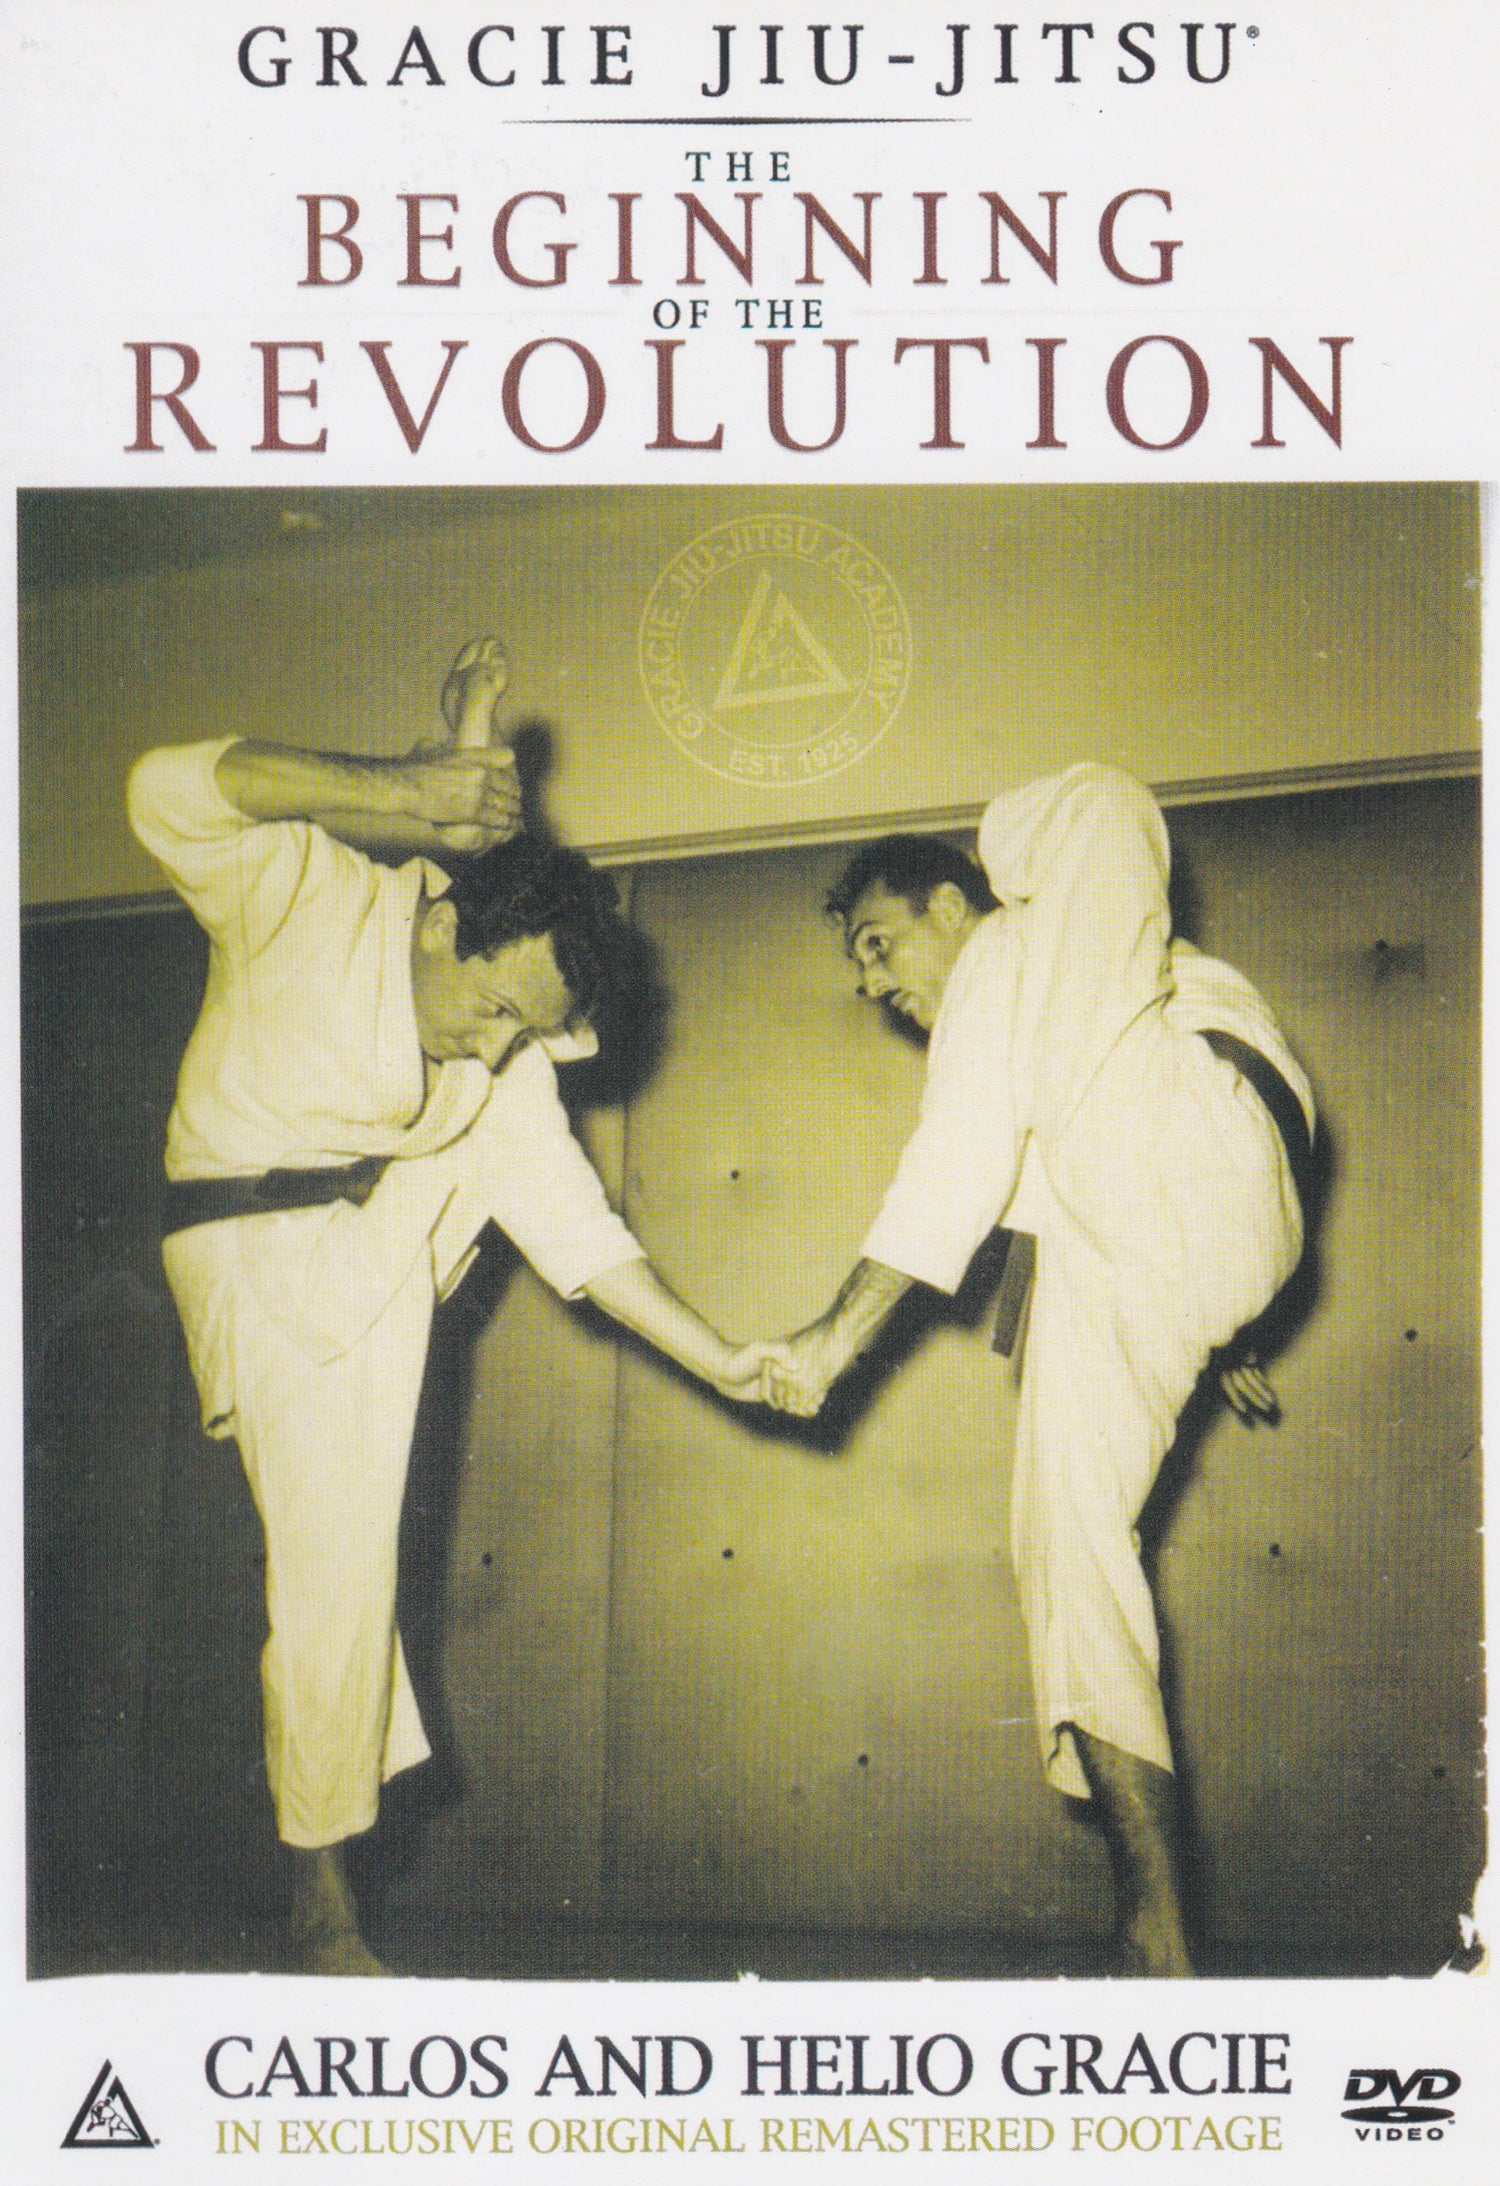 Gracie Jiu-Jitsu: The Beginning of the Revolution DVD with Carlos & Helio Gracie